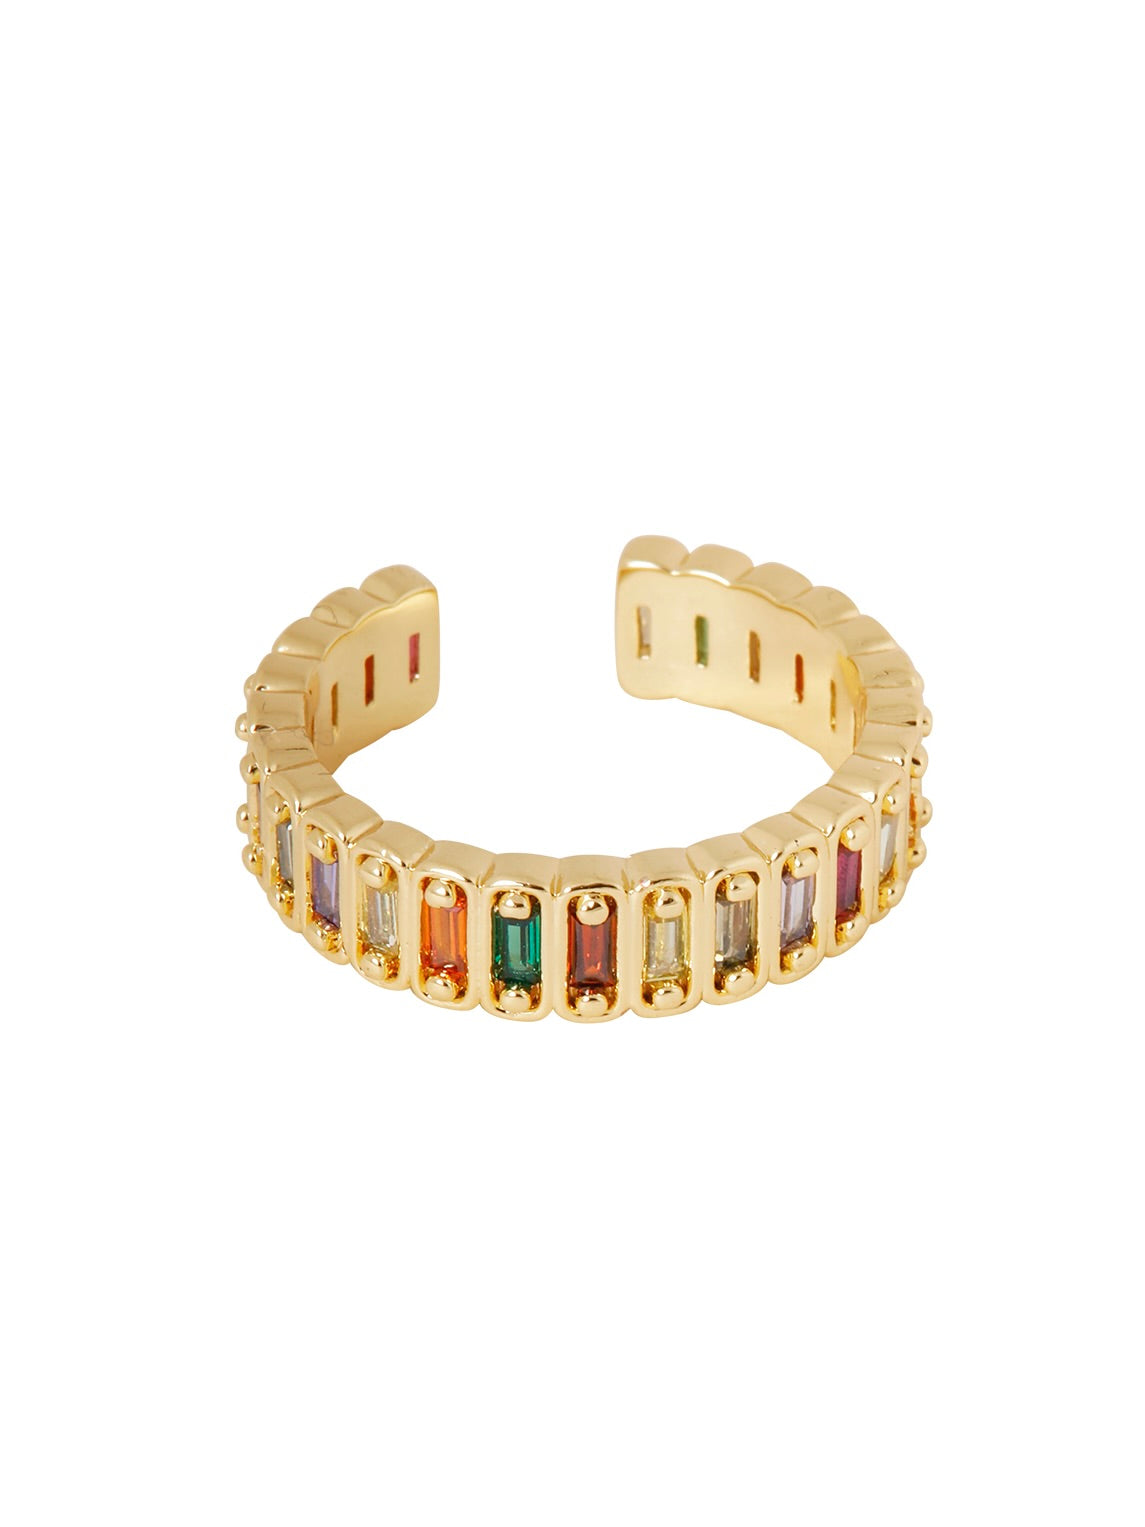 Ring strass multicolori small - LEEF mode en accessoires